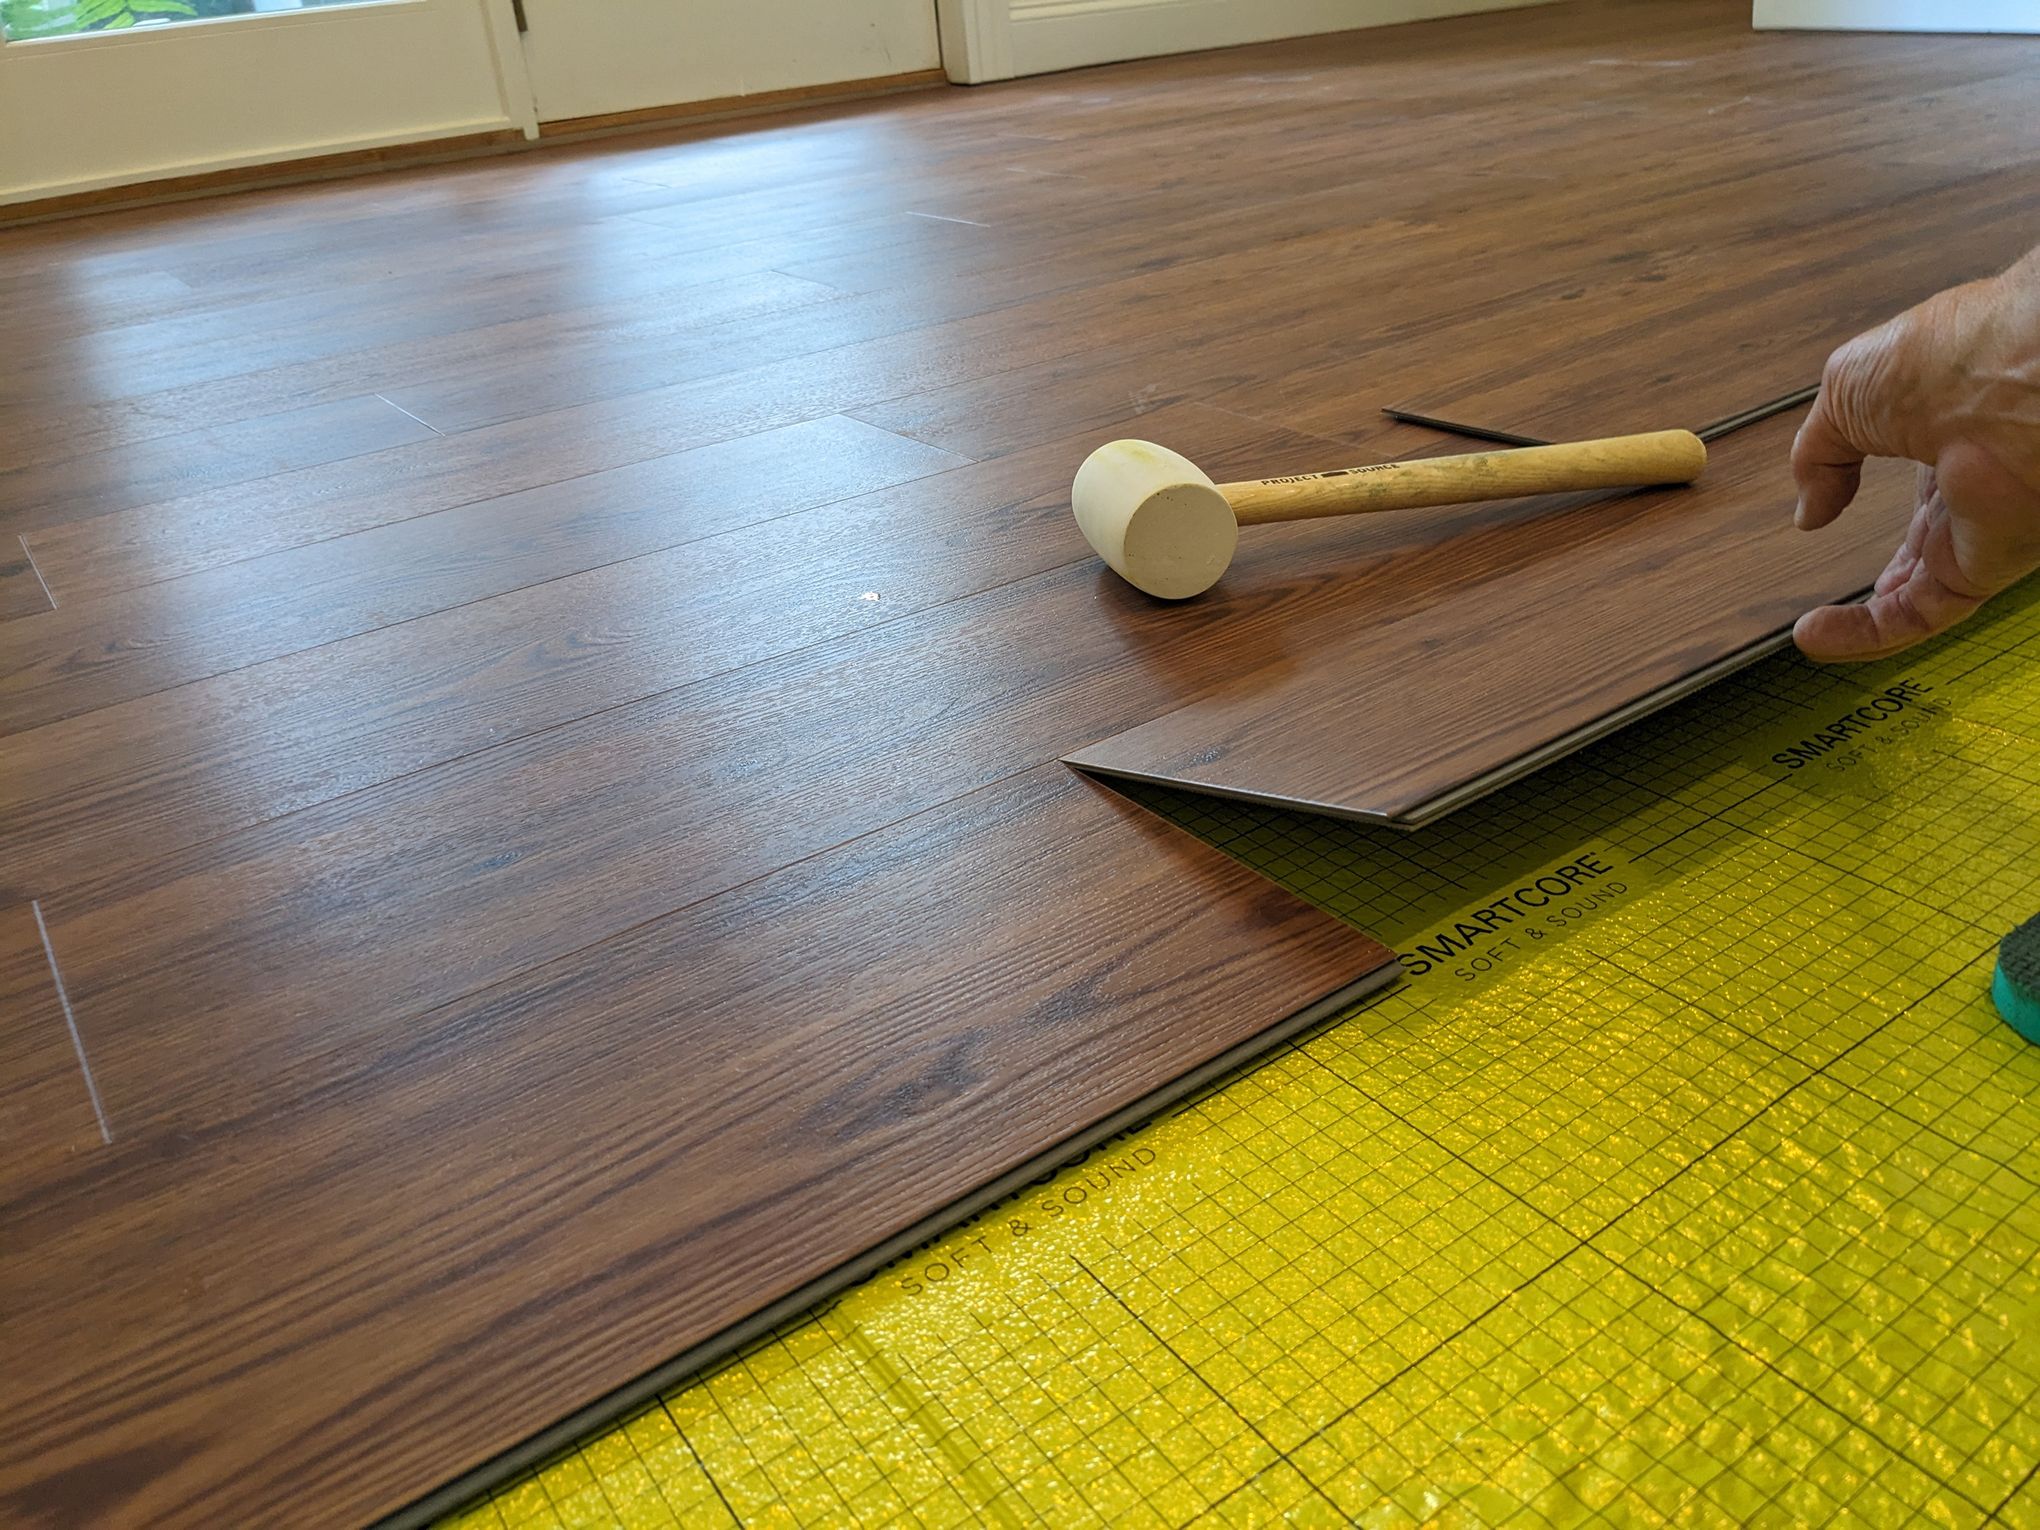 How to Clean Luxury Vinyl Plank Flooring - LVP